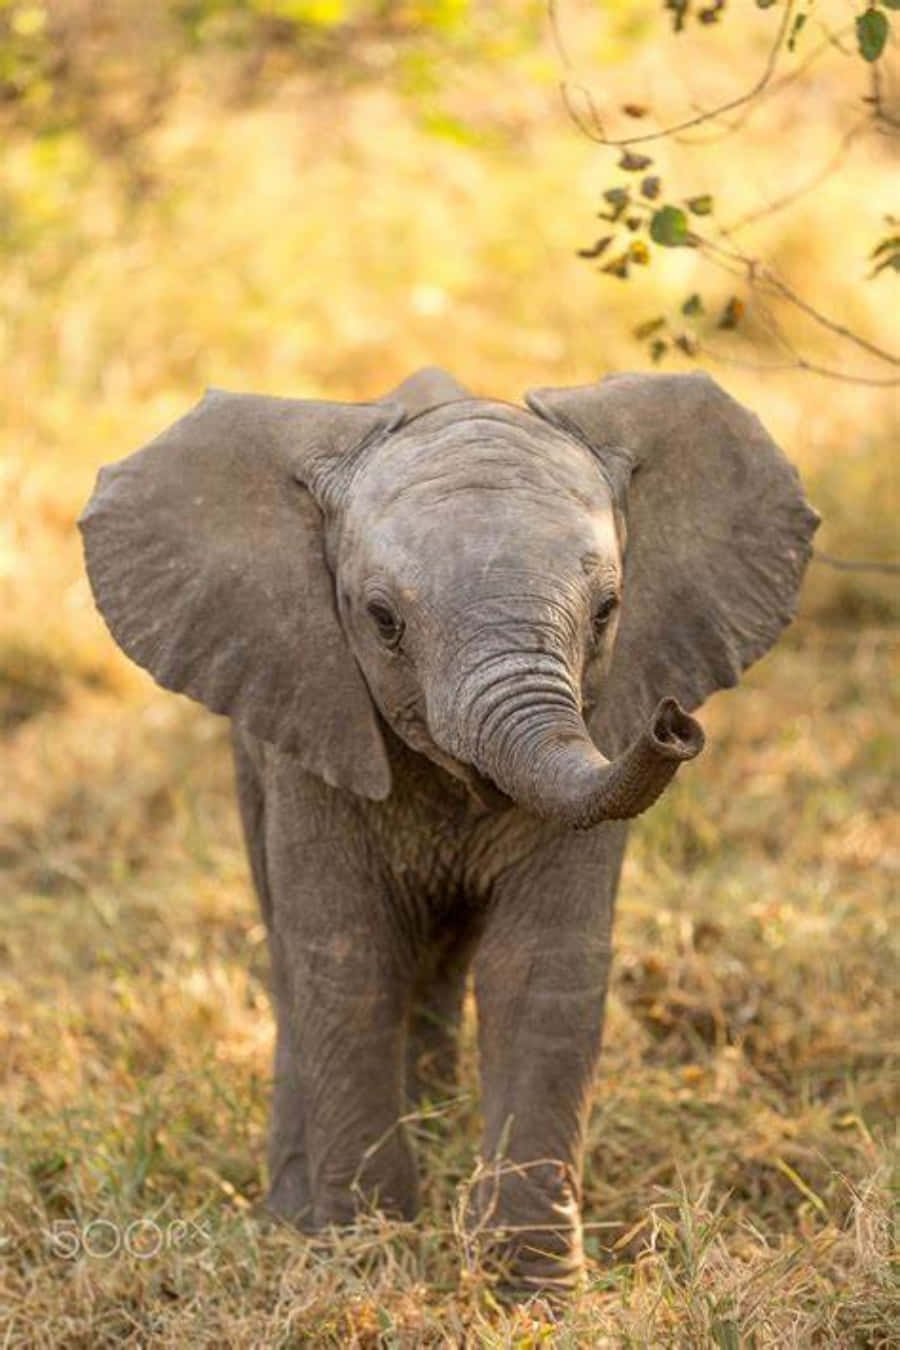 Adorable little Elephant